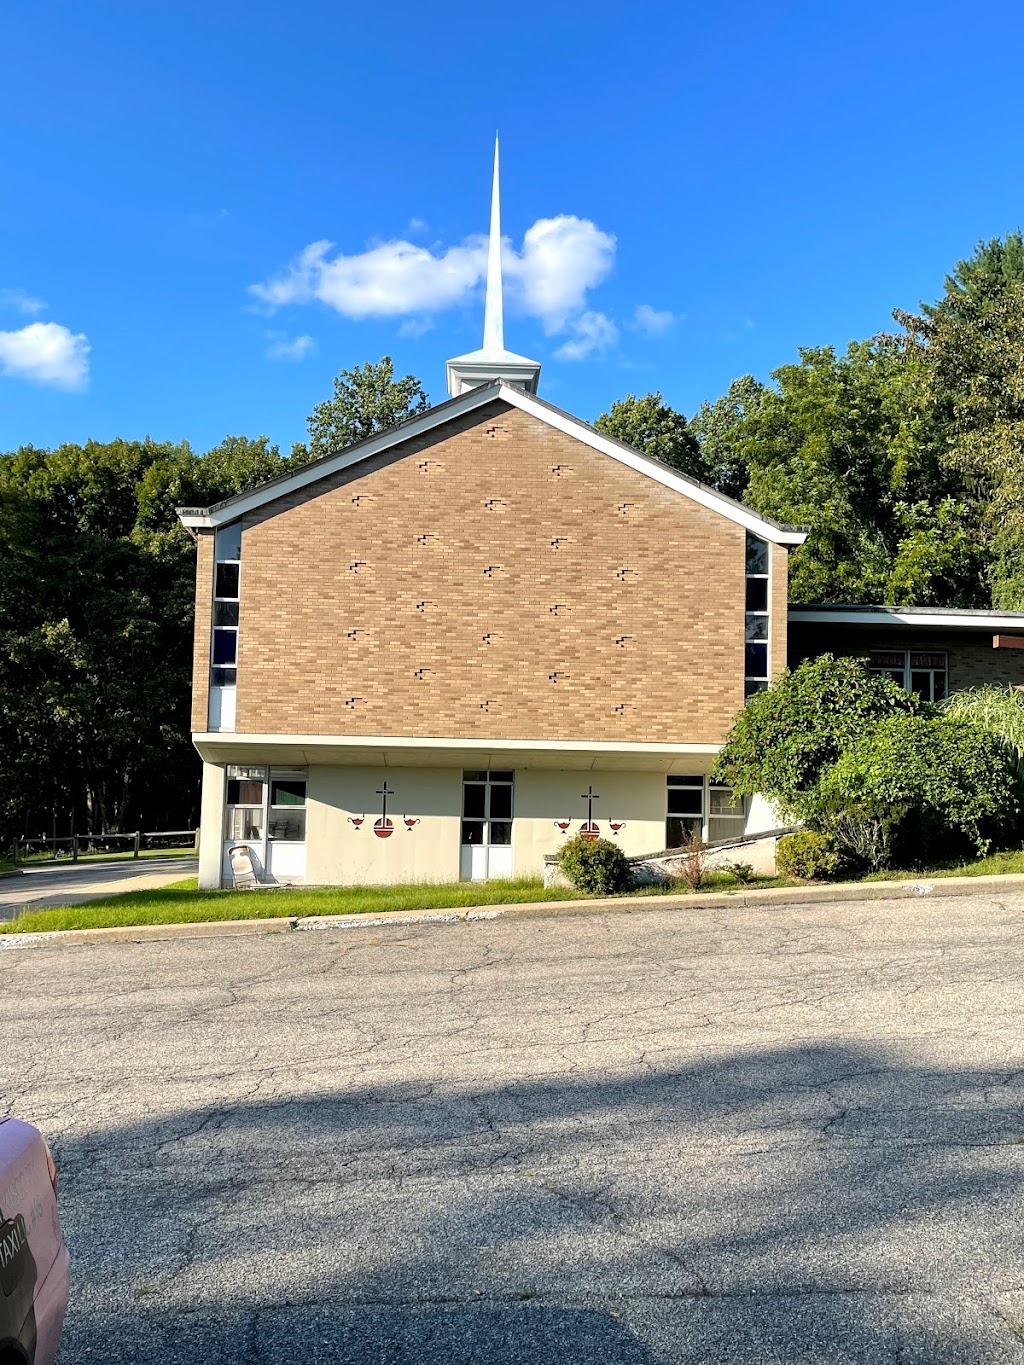 United Methodist Church | 70 Bedford Rd, Pleasantville, NY 10570 | Phone: (914) 769-0357